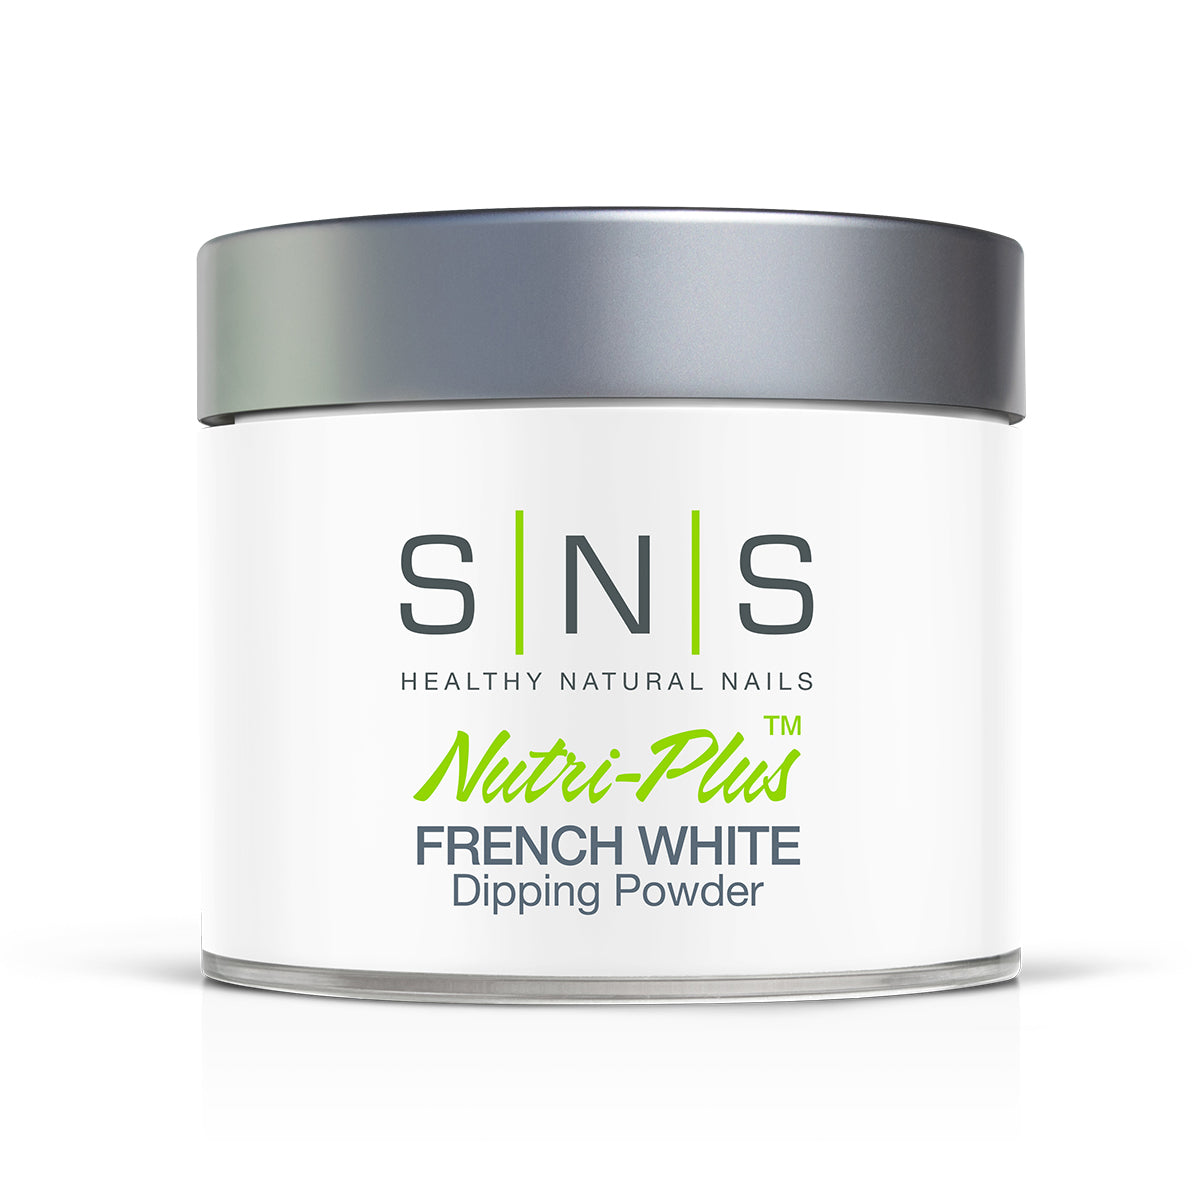 SNS Nutri-Plus French Dipping Powder French White